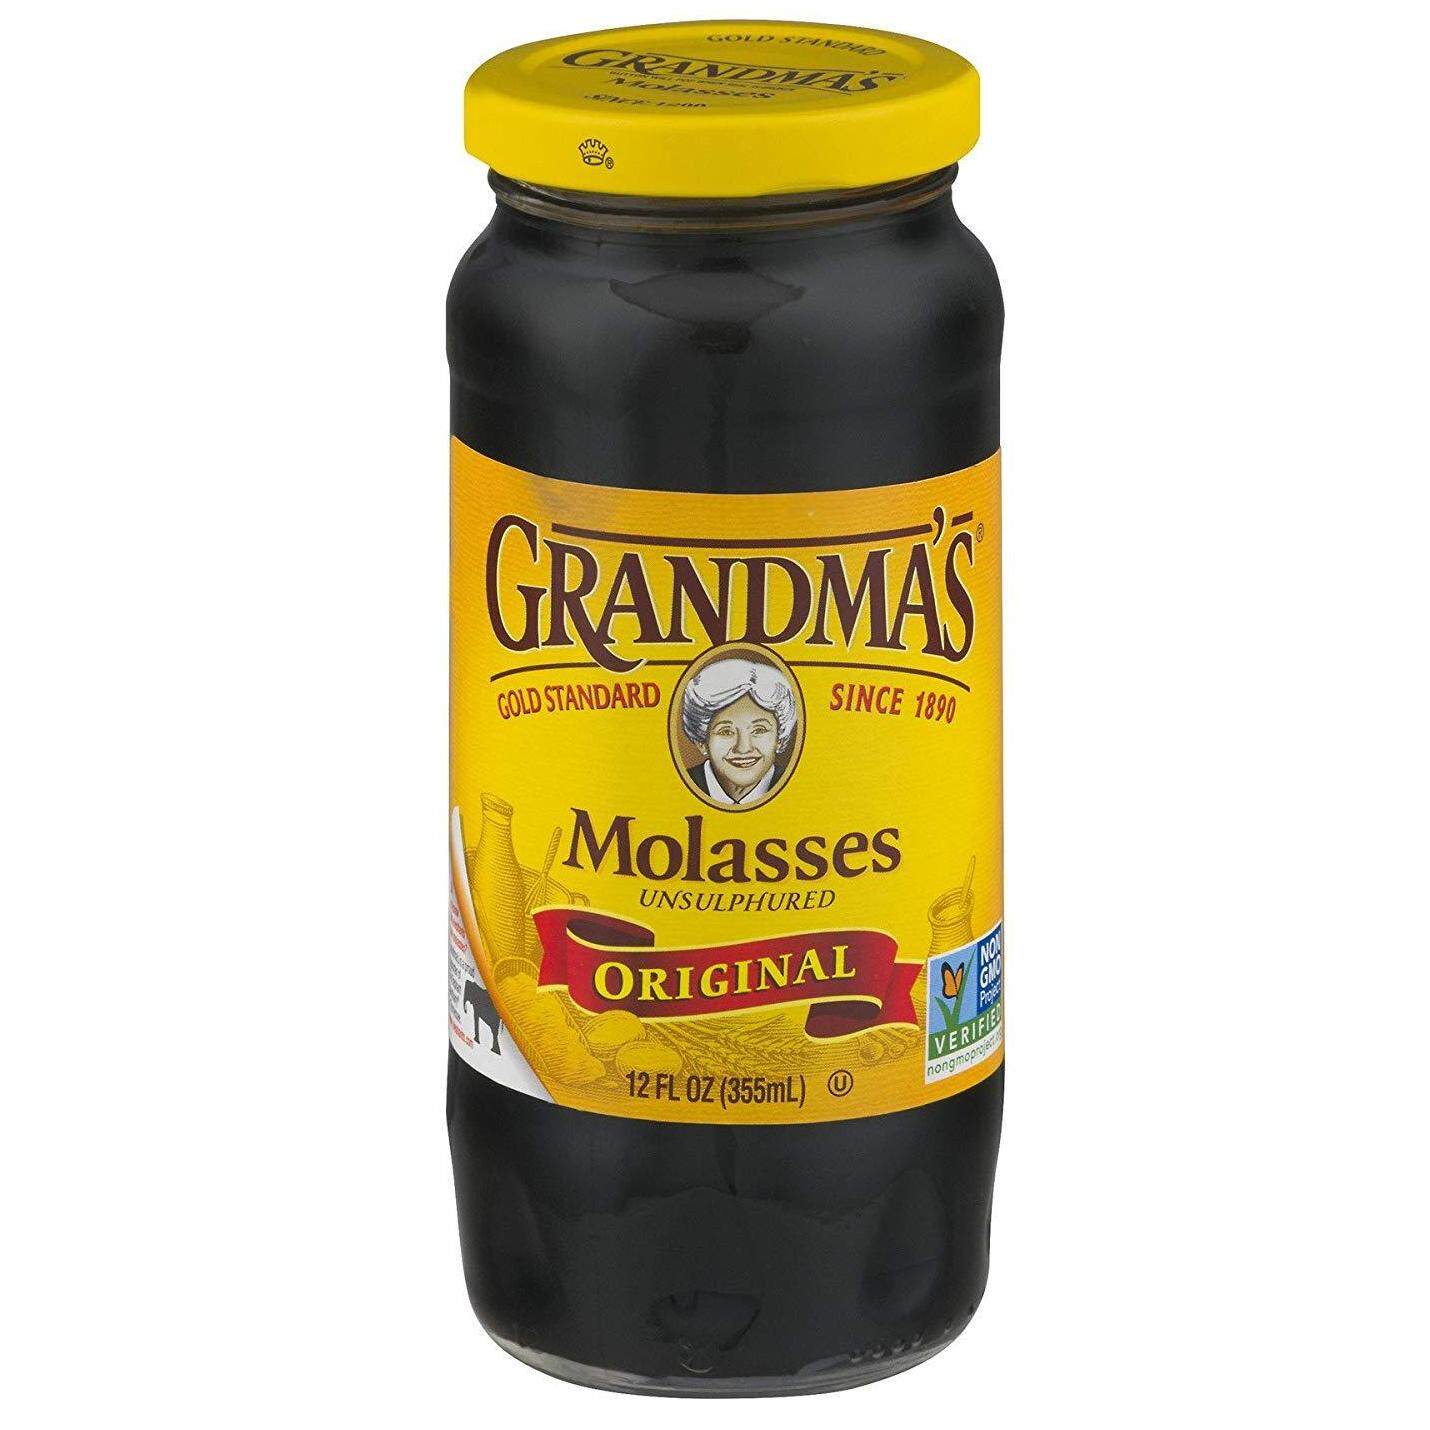 Grandma's Molasses Original (12 fl oz) แกรนด์มา โมลาสเสส ออริจินัล สเปรด ทาขนมปัง 355ml.